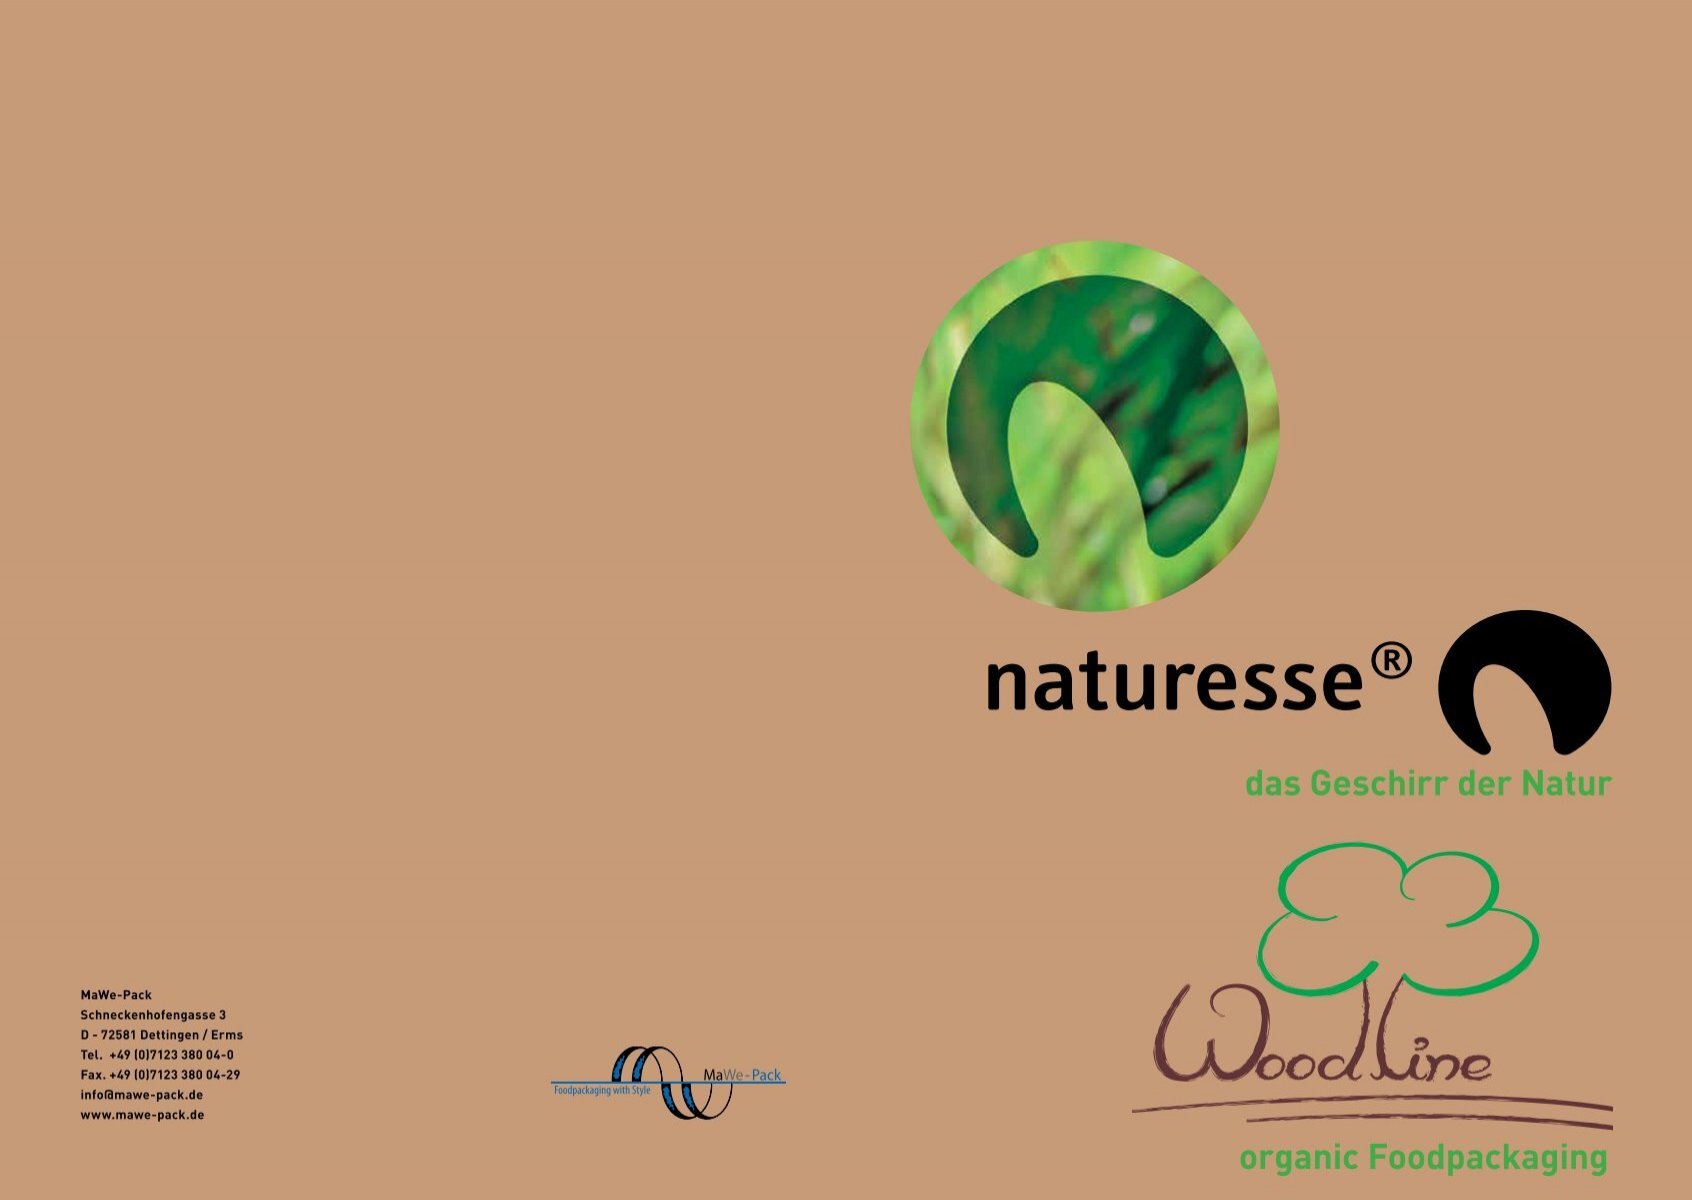 Katalog Woodline und Naturesse - MaWe-Pack